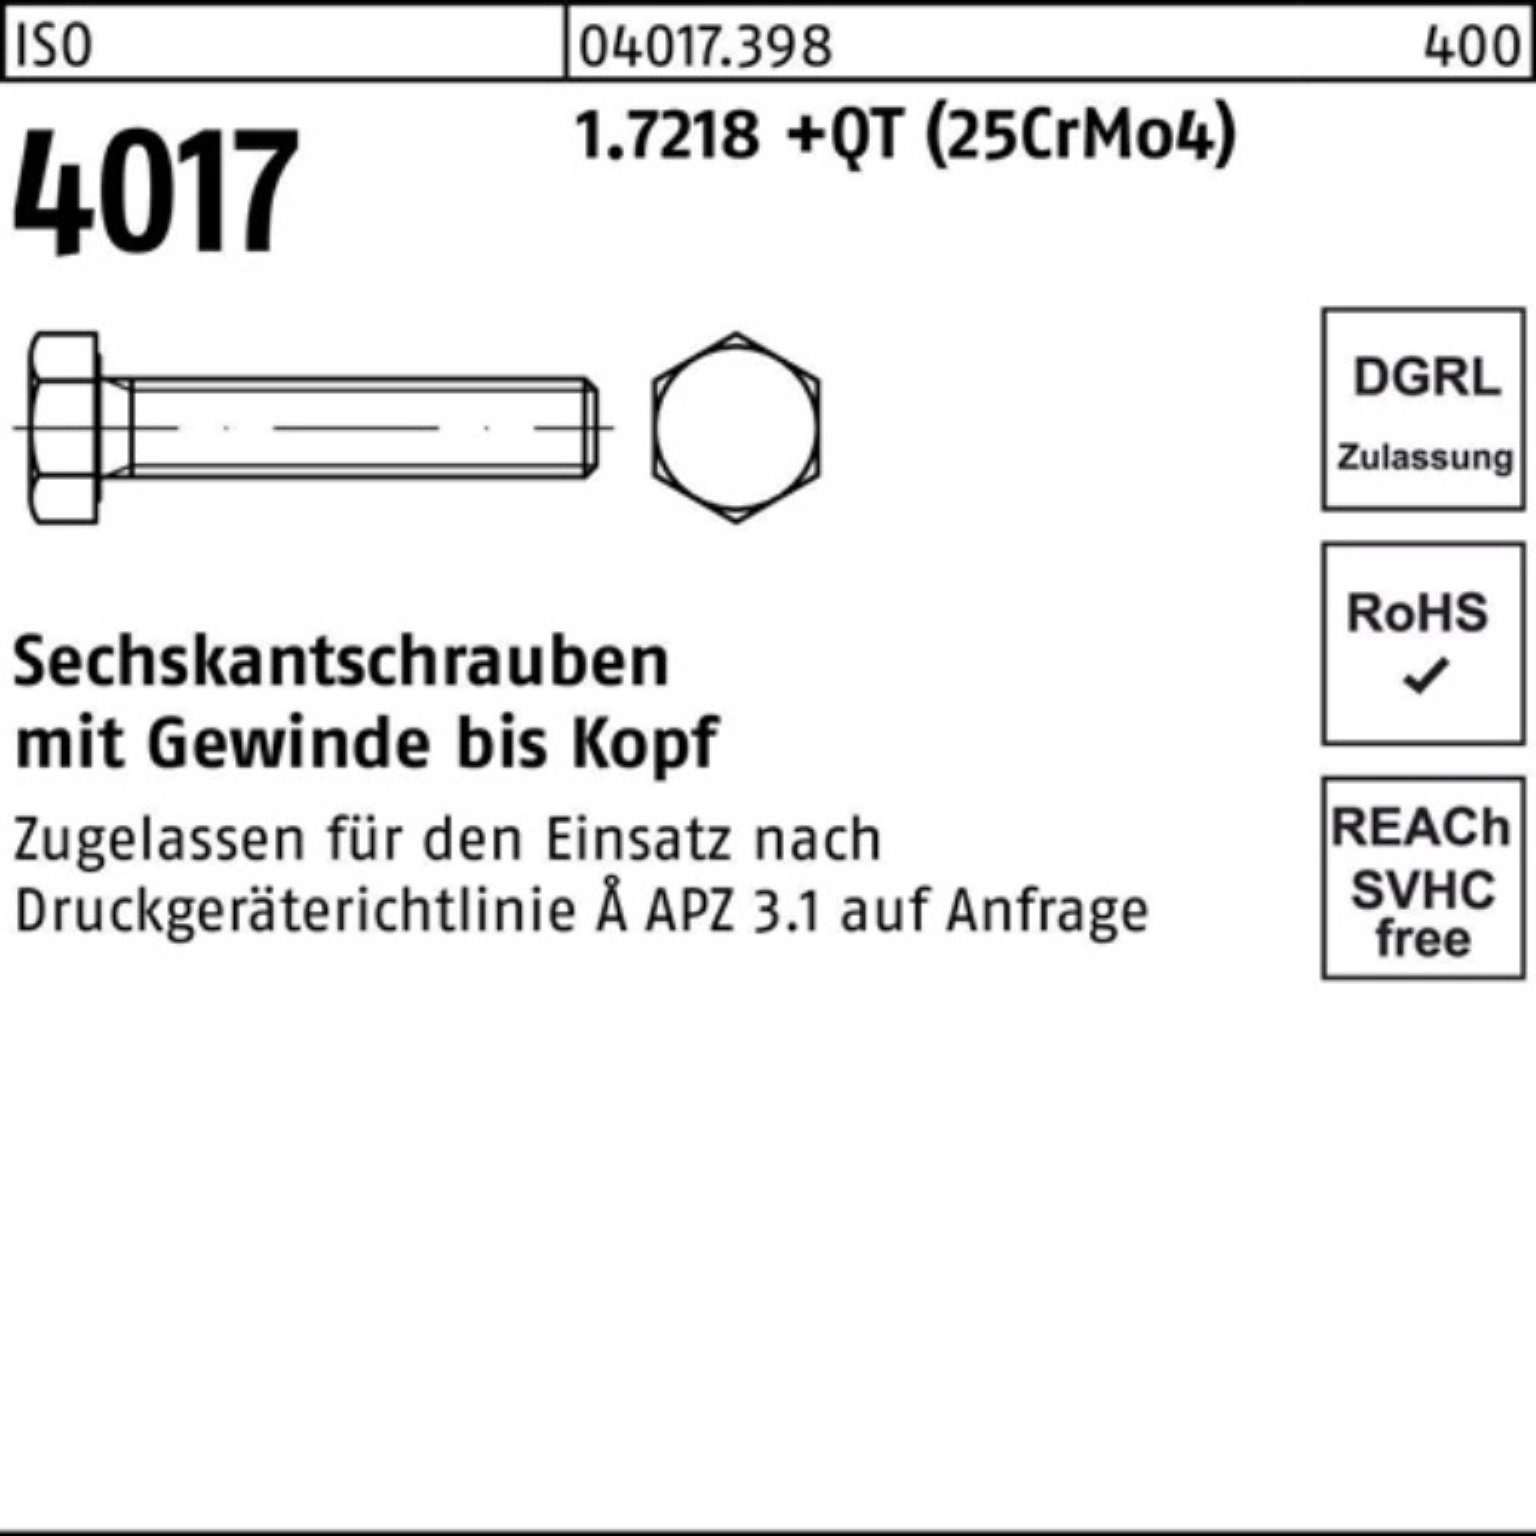 Bufab Sechskantschraube 100er ISO (25CrMo4) 1.7218 VG 4017 120 Sechskantschraube M20x Pack +QT